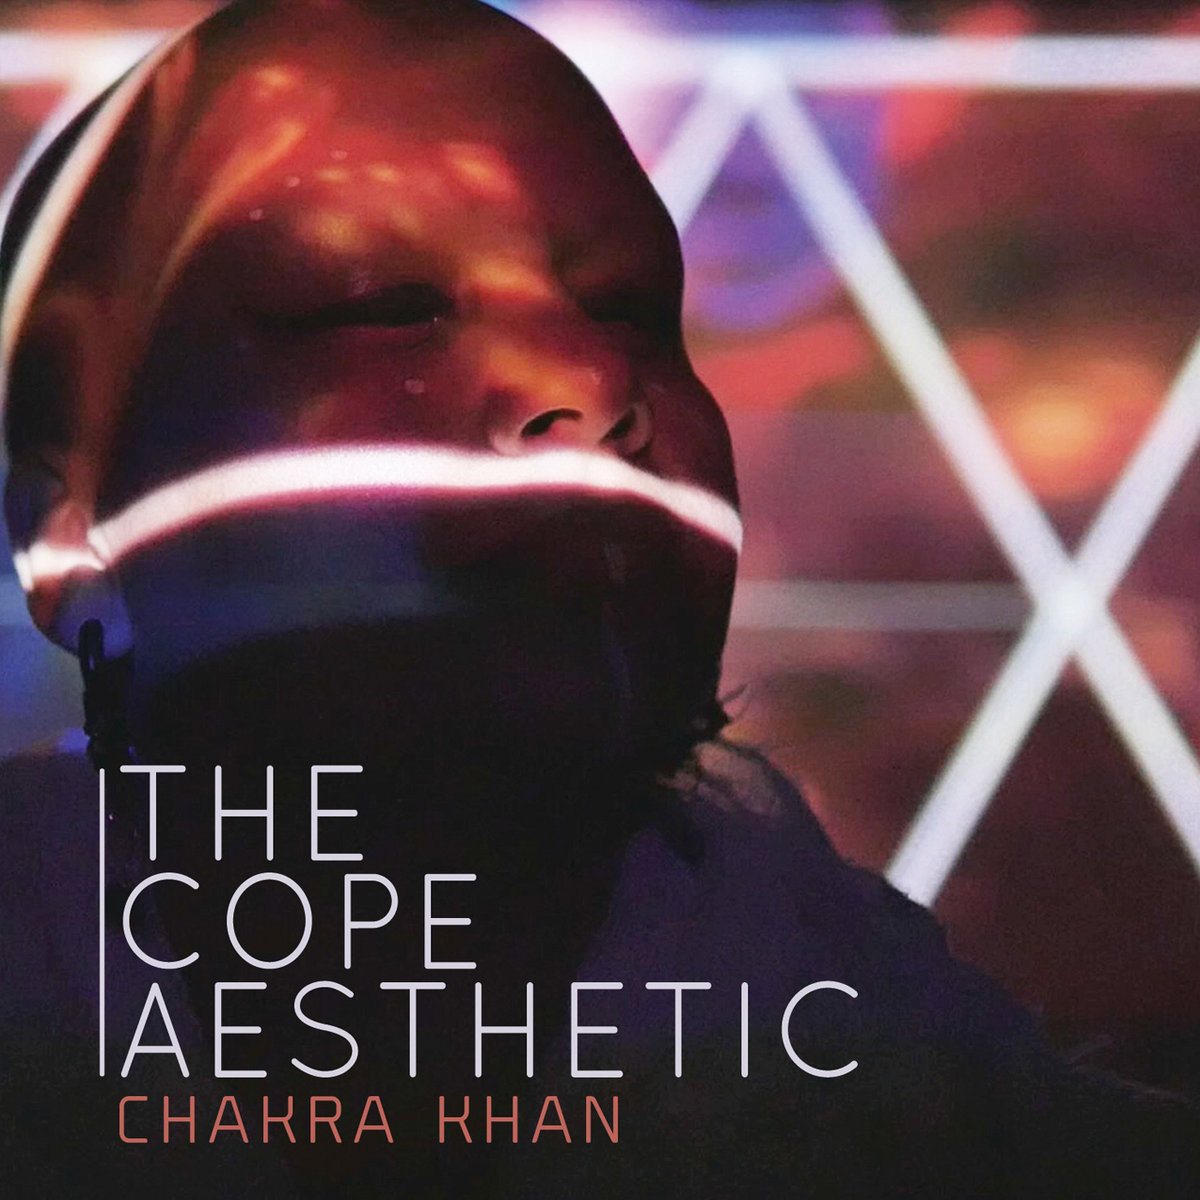 Chakra-Khan-The-Cope-Aesthetic